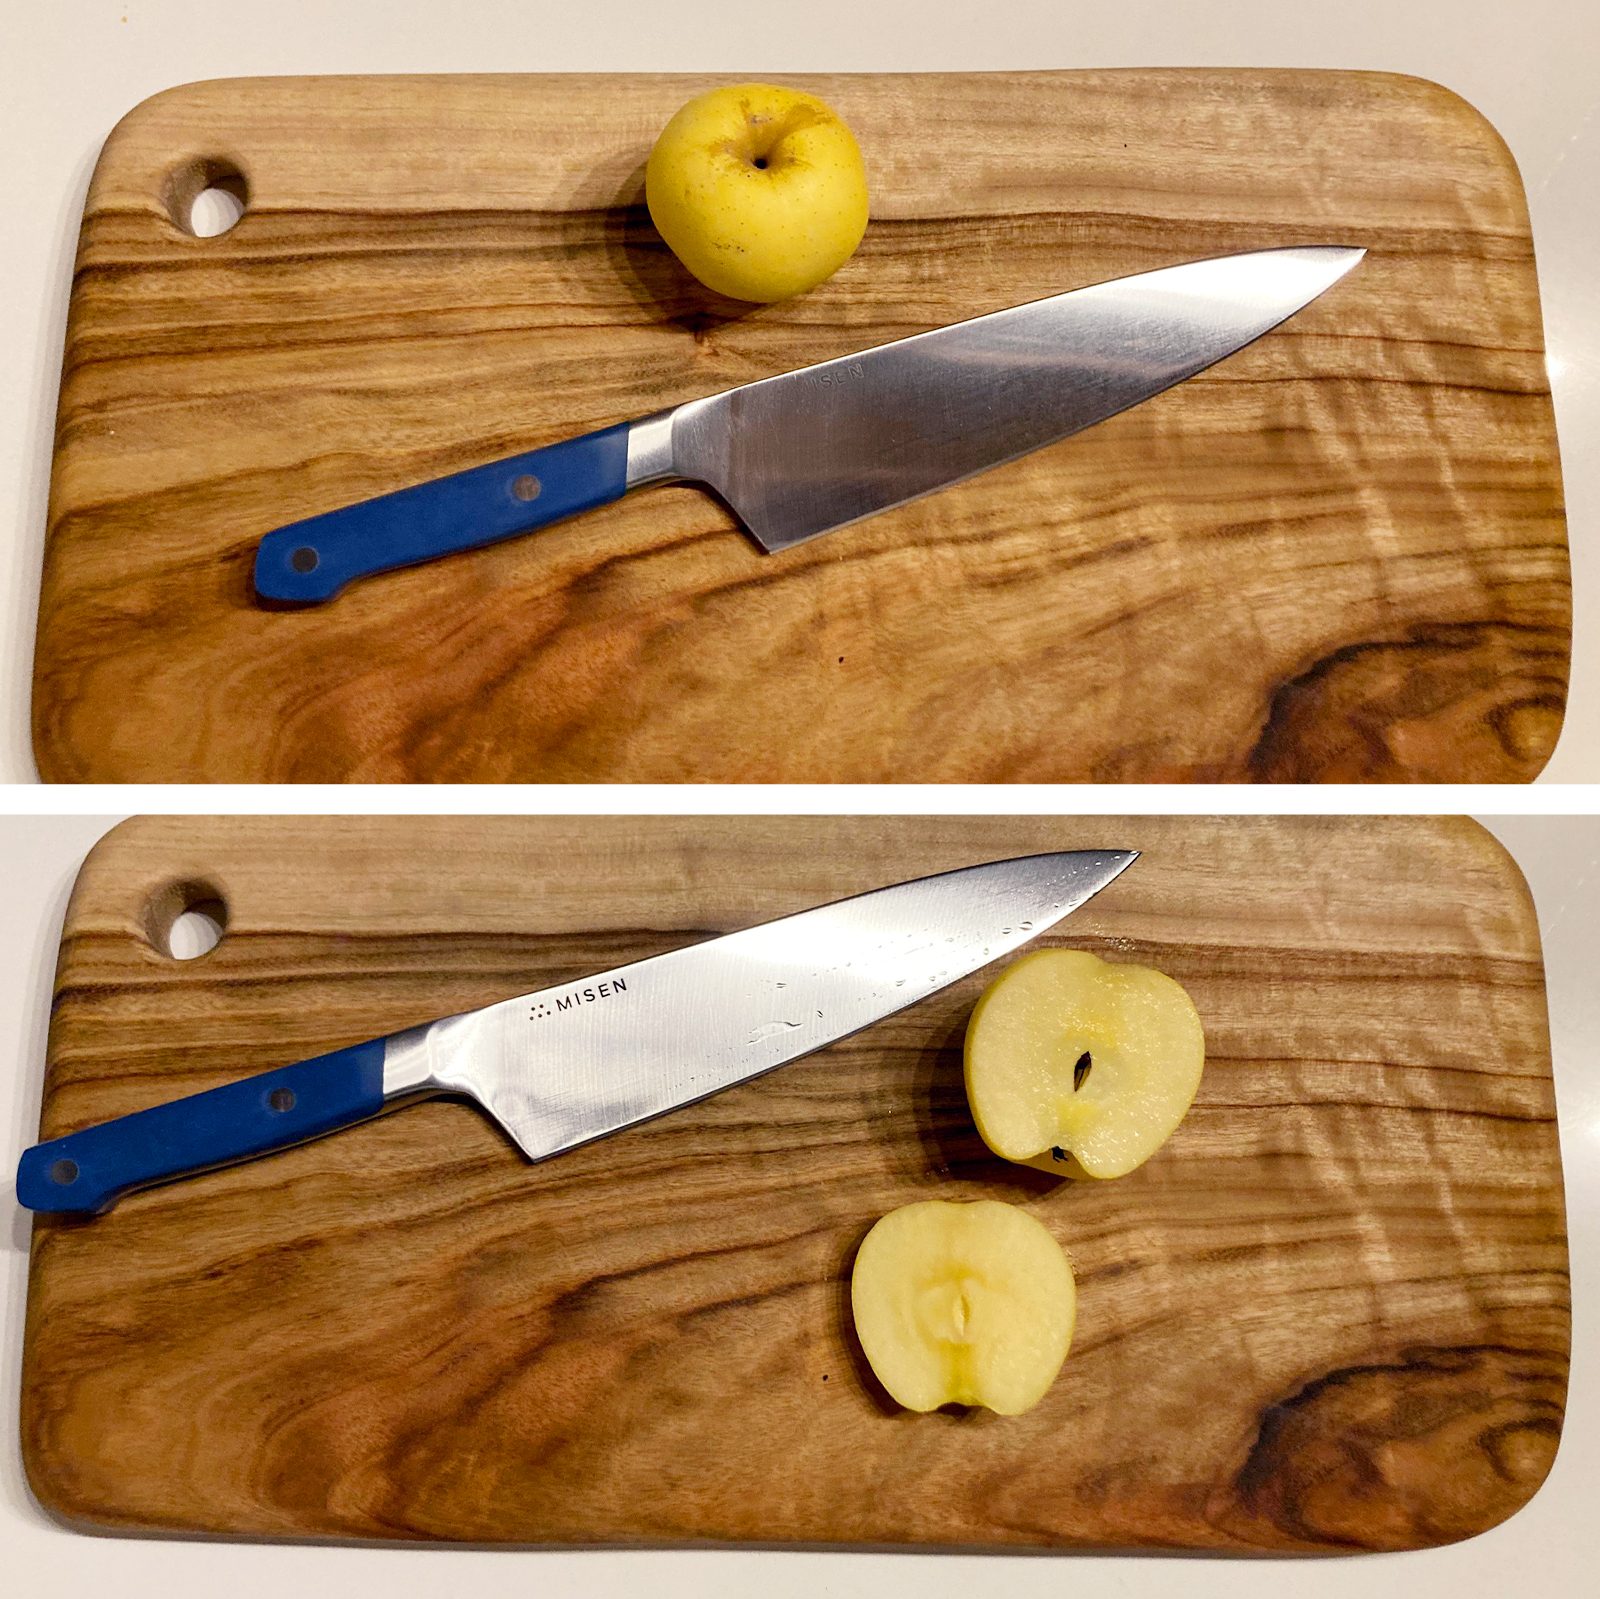 https://www.tasteofhome.com/wp-content/uploads/2021/11/Misen-Knife-Slicing-Apple.jpg?fit=680%2C680